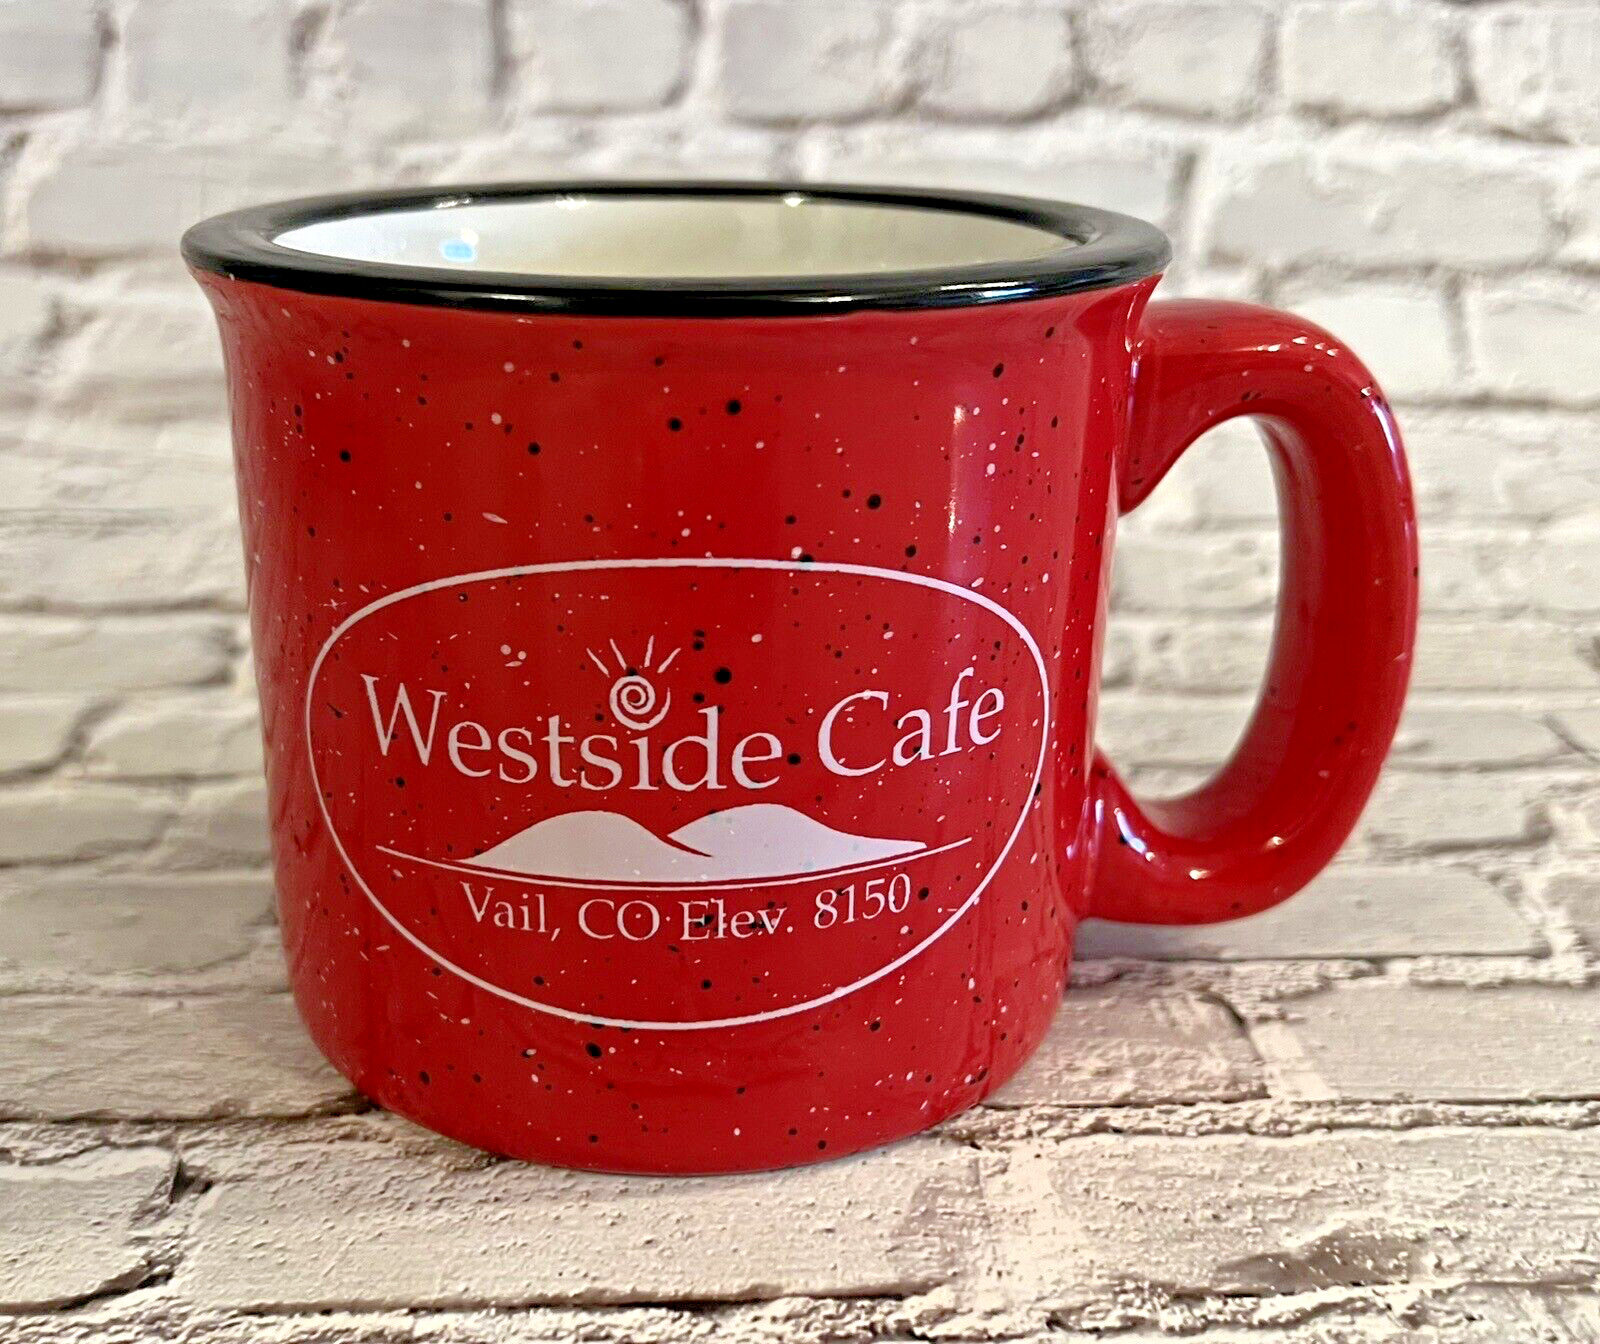 Westside Cafe Vail Colorado Elev. 8150 Red Speckled 12oz Ceramic Coffee Mug Cup